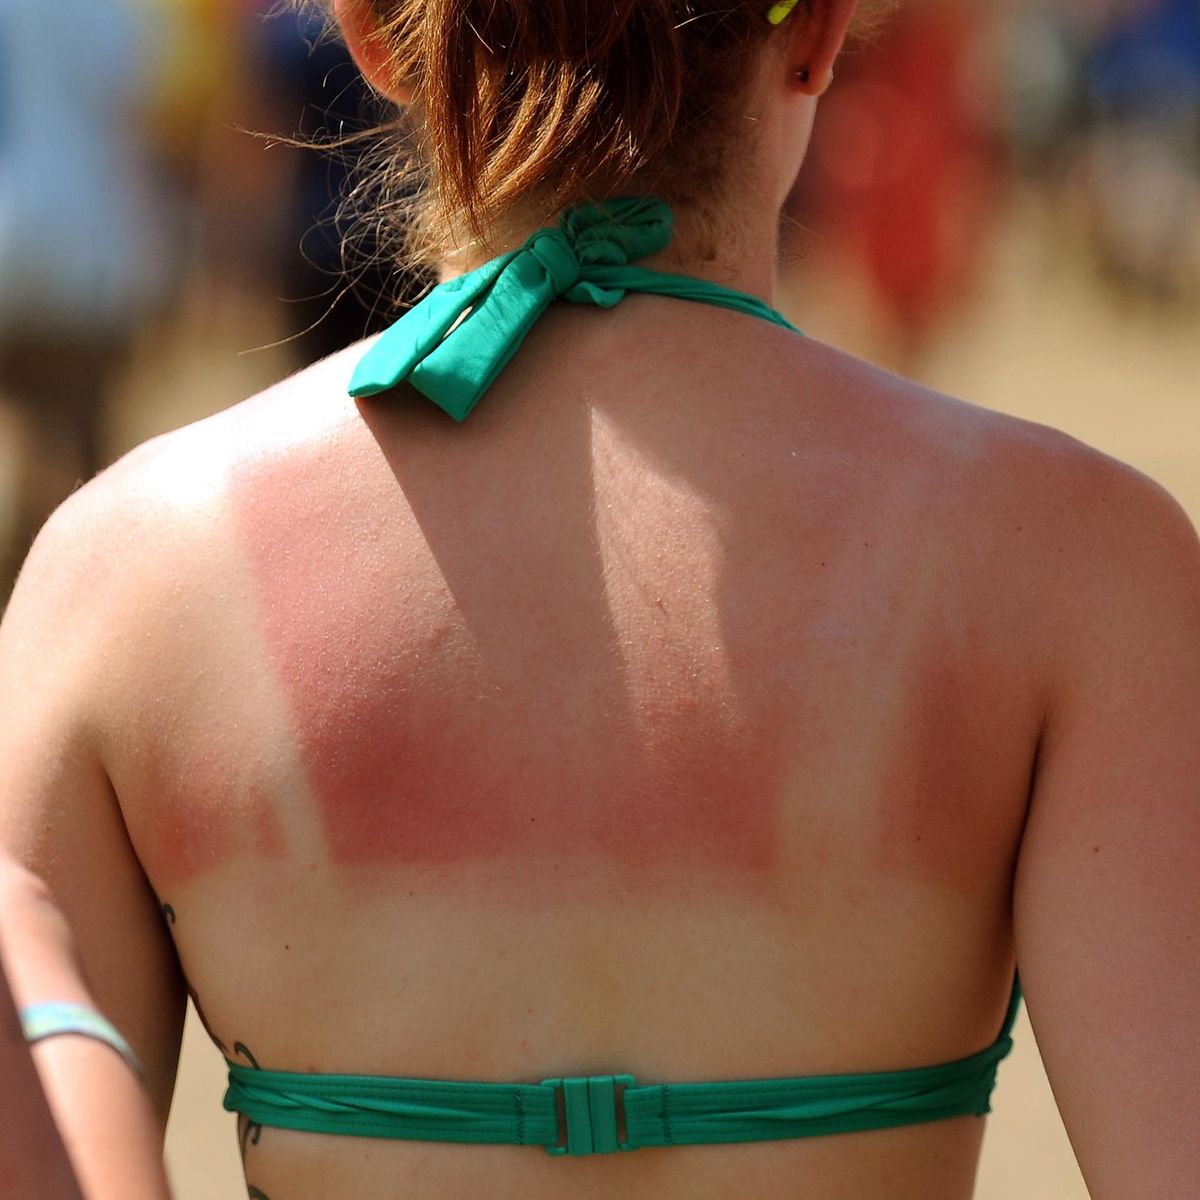 Sunburn: Symptoms & Treatment